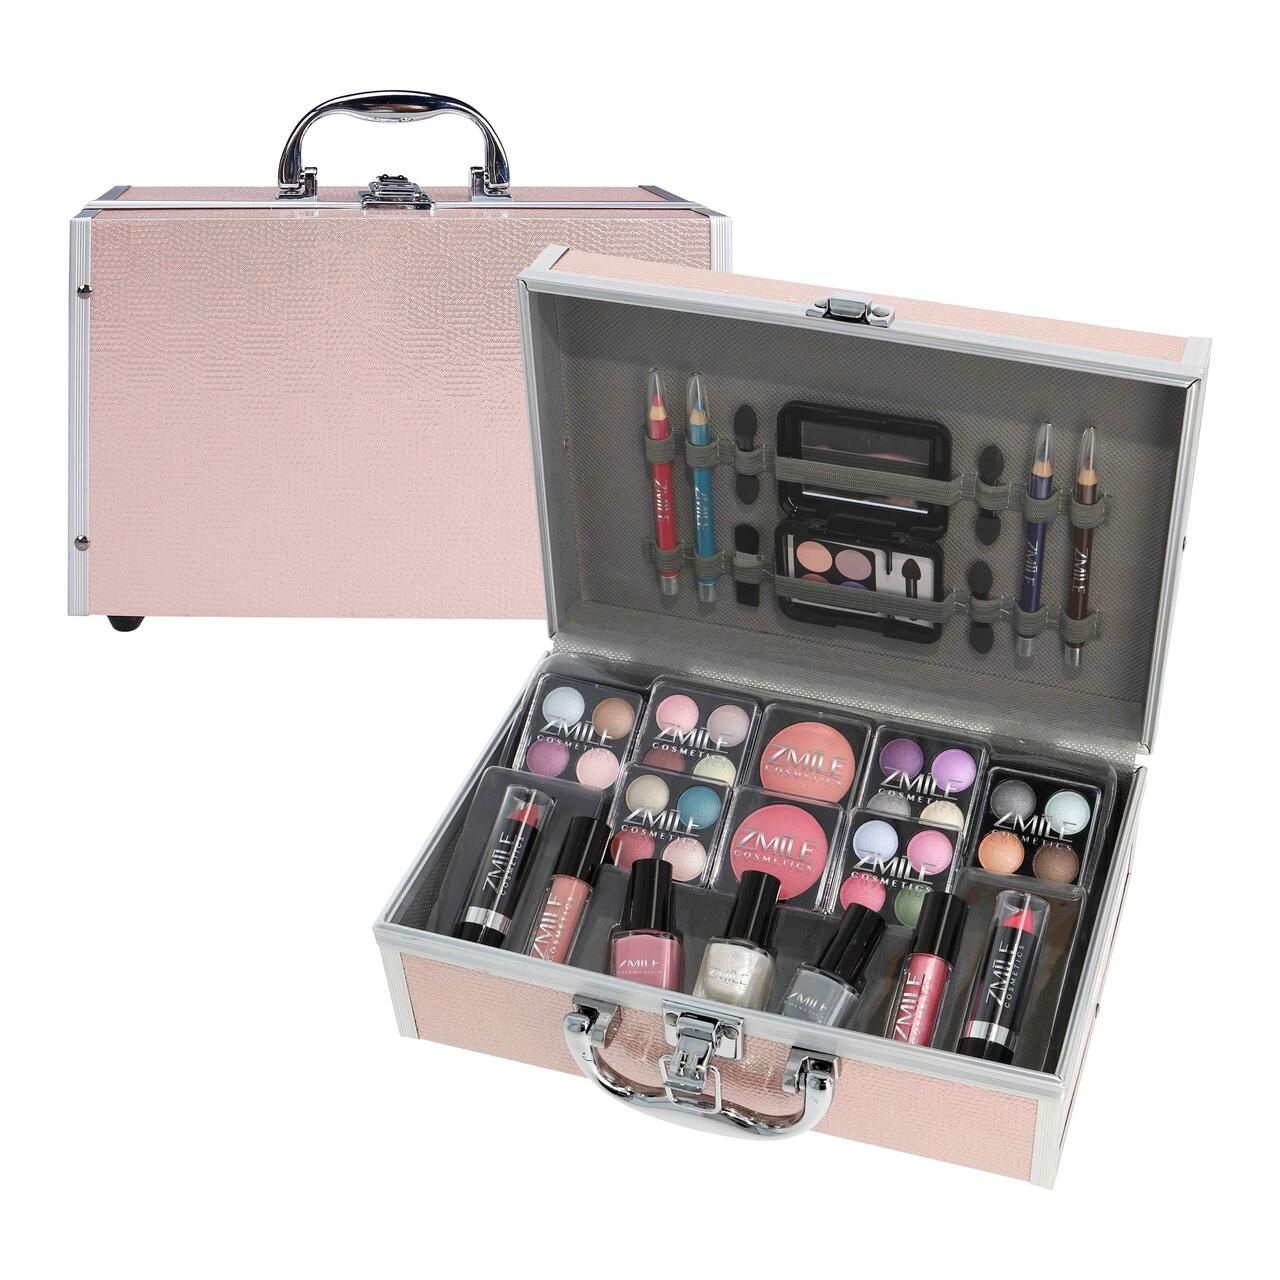 ZMILE cosmetics, Kosmetik-Koffer Eyecatcher, 42 Teile